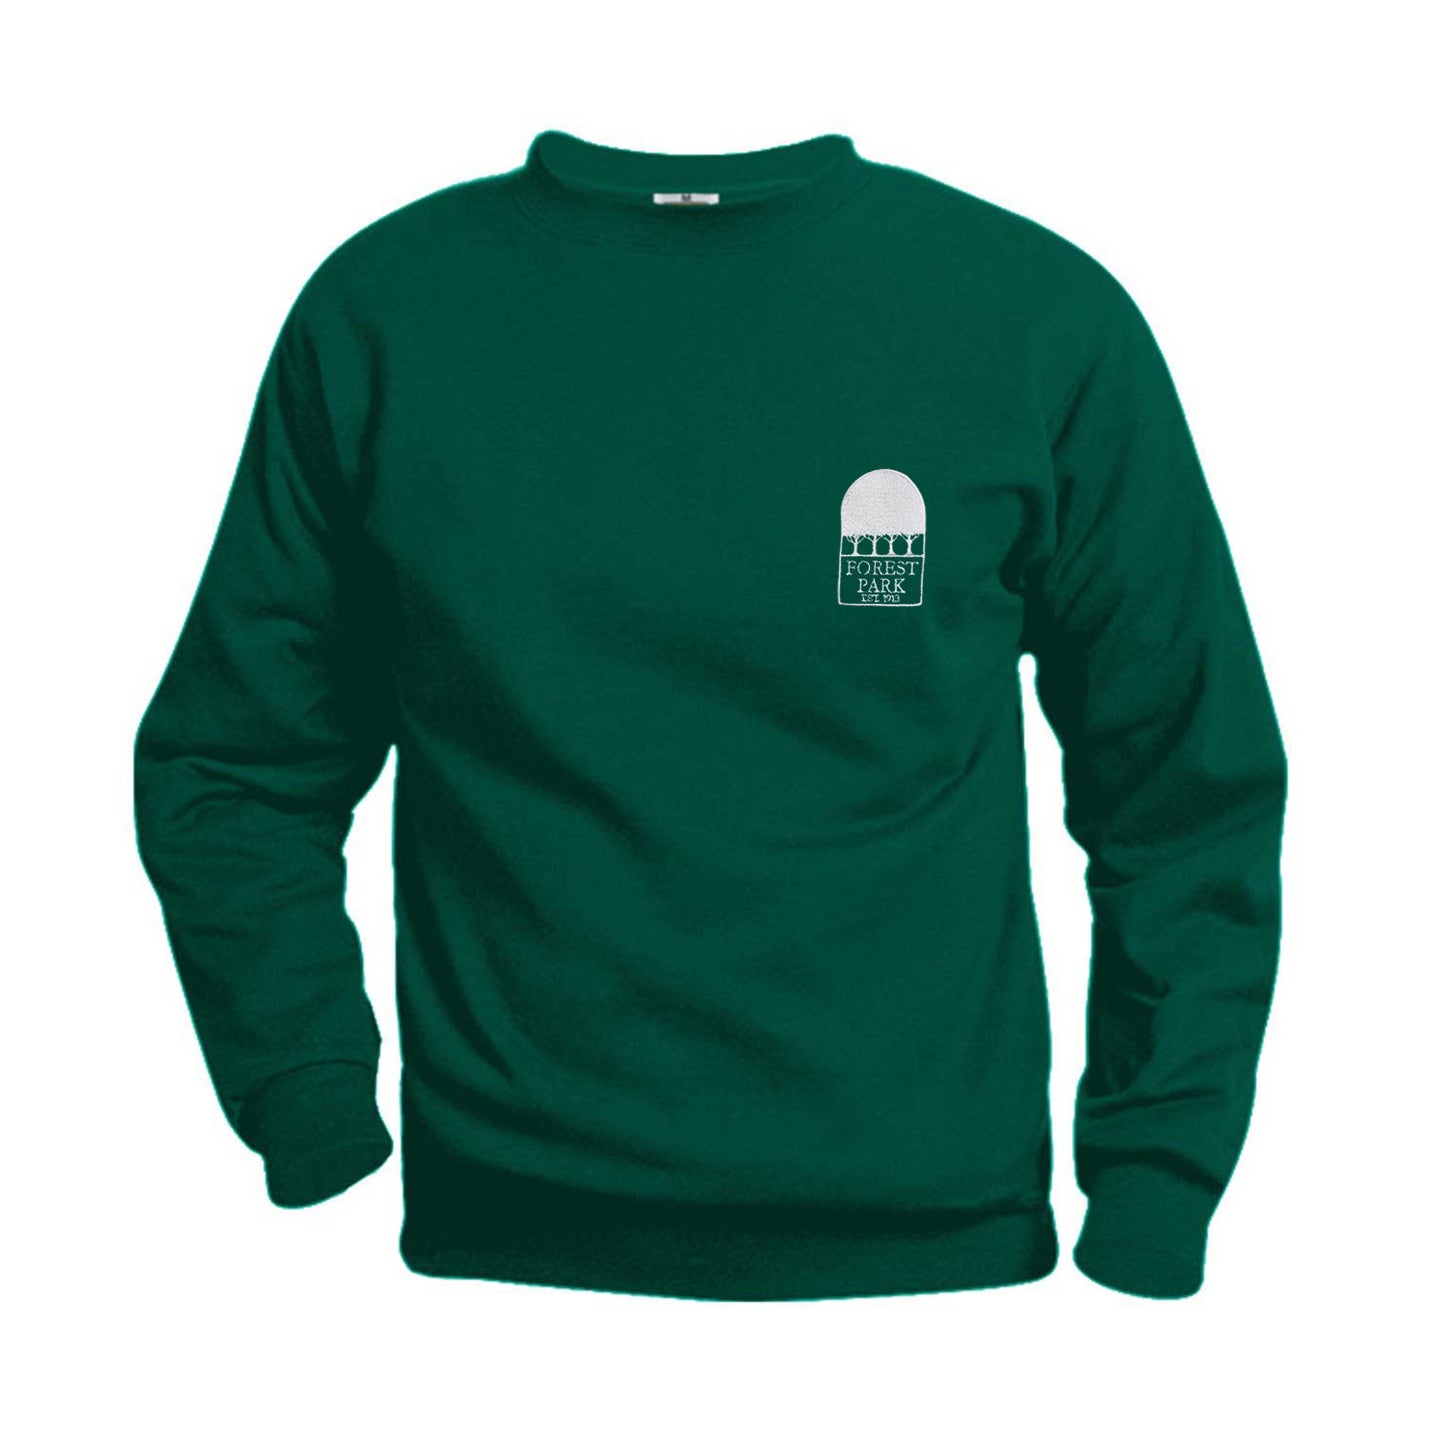 Youth Crewneck Sweatshirt With Forest Park School Logo